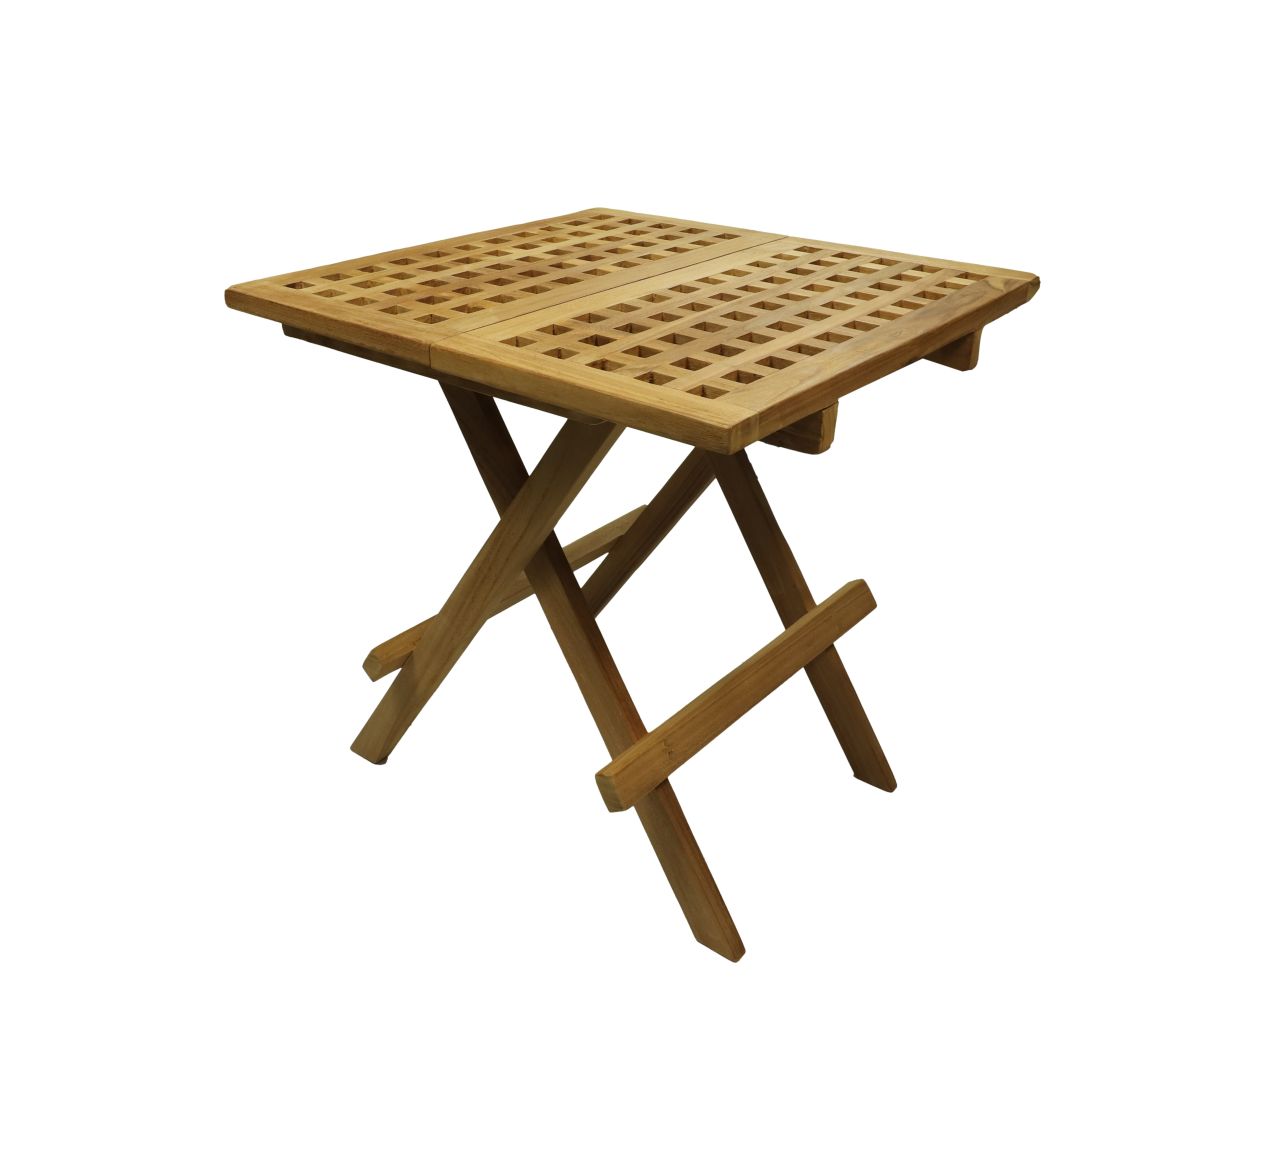 Uitklapbare picknick tafel wafelpatroon - 50x50x50 - Naturel- Teak